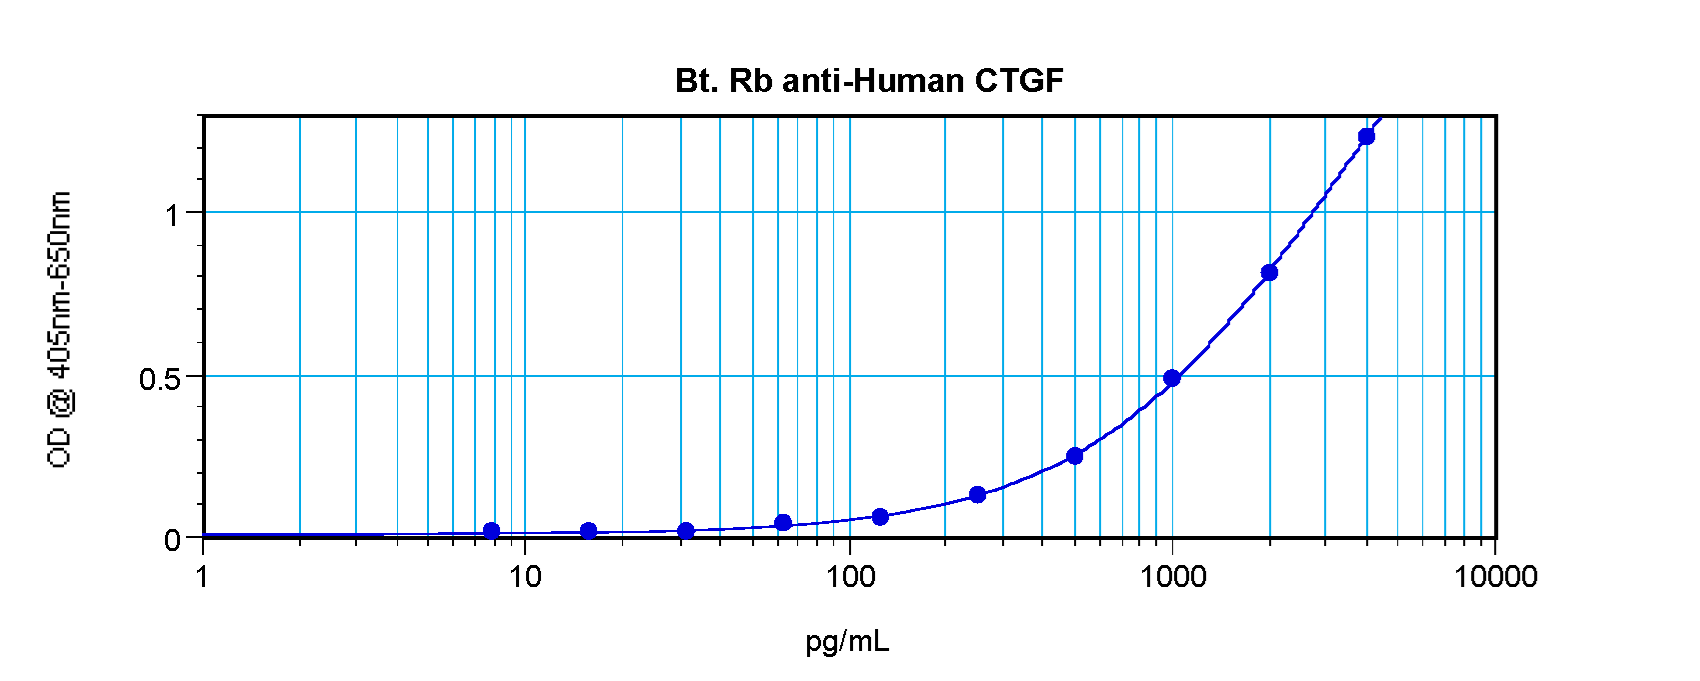 CTGF Antibody - Biotinylated Anti-Human CTGF Sandwich ELISA